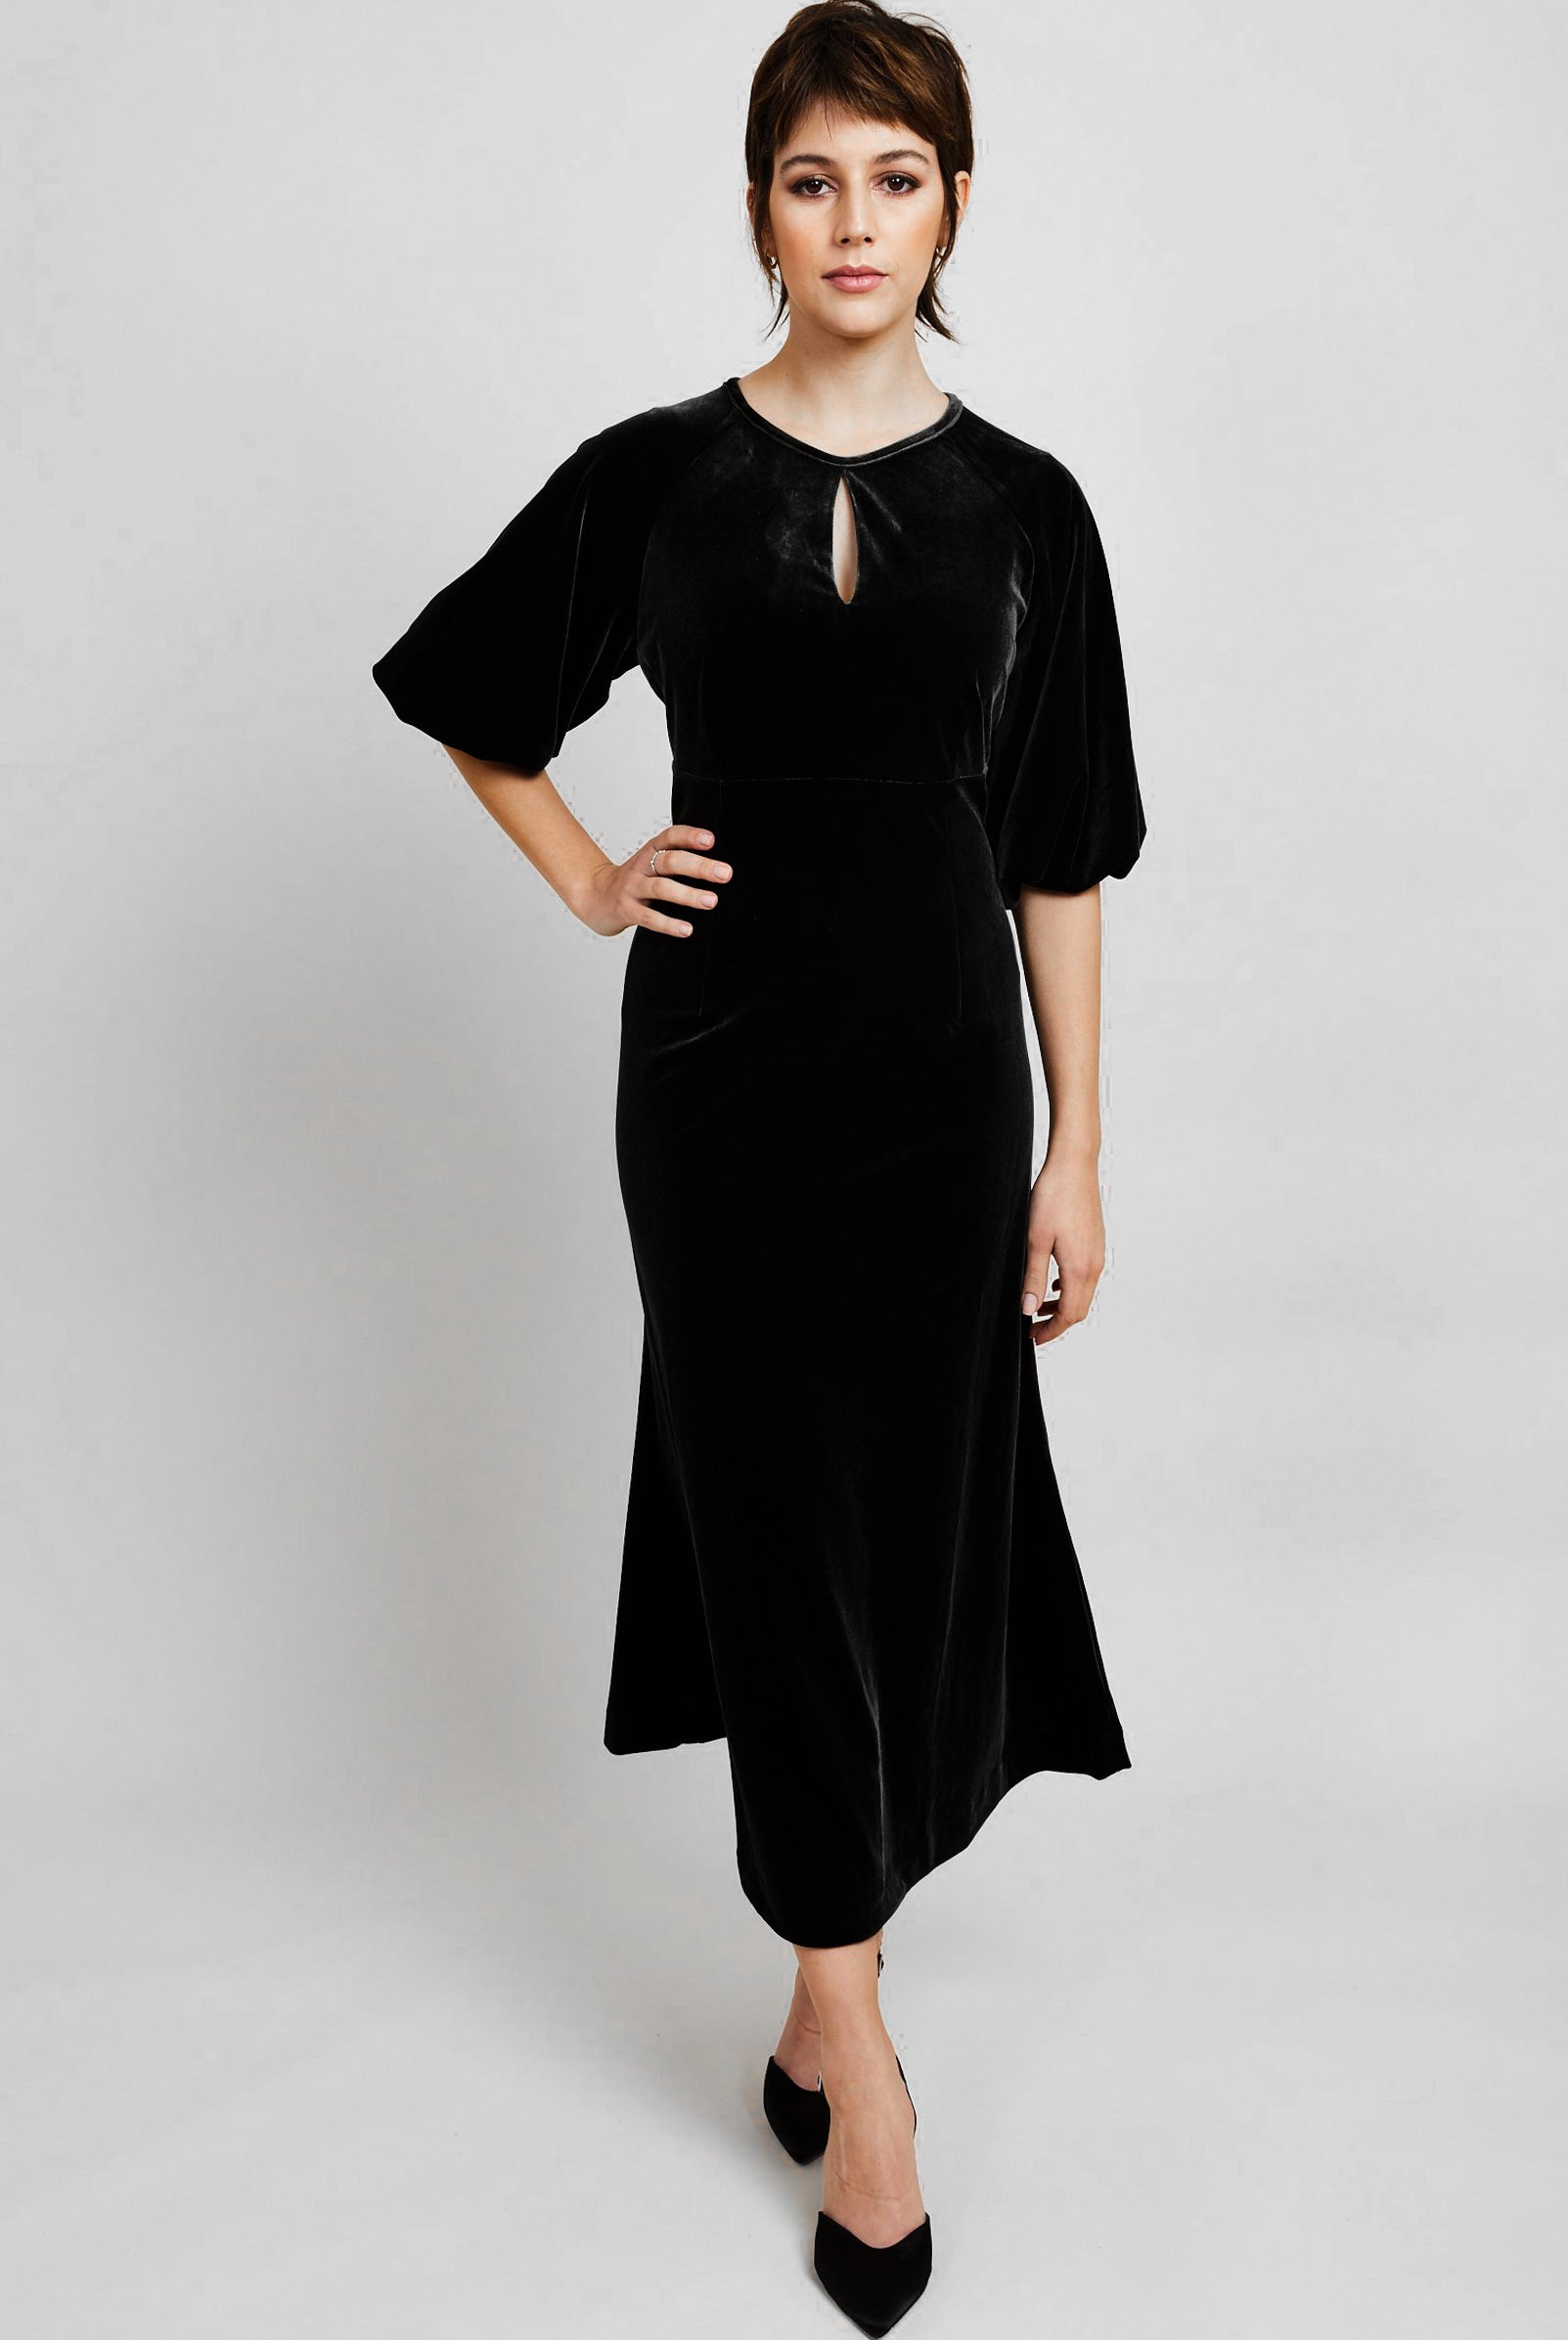 KAMARE - Valentina Dress Black - Magpie Style